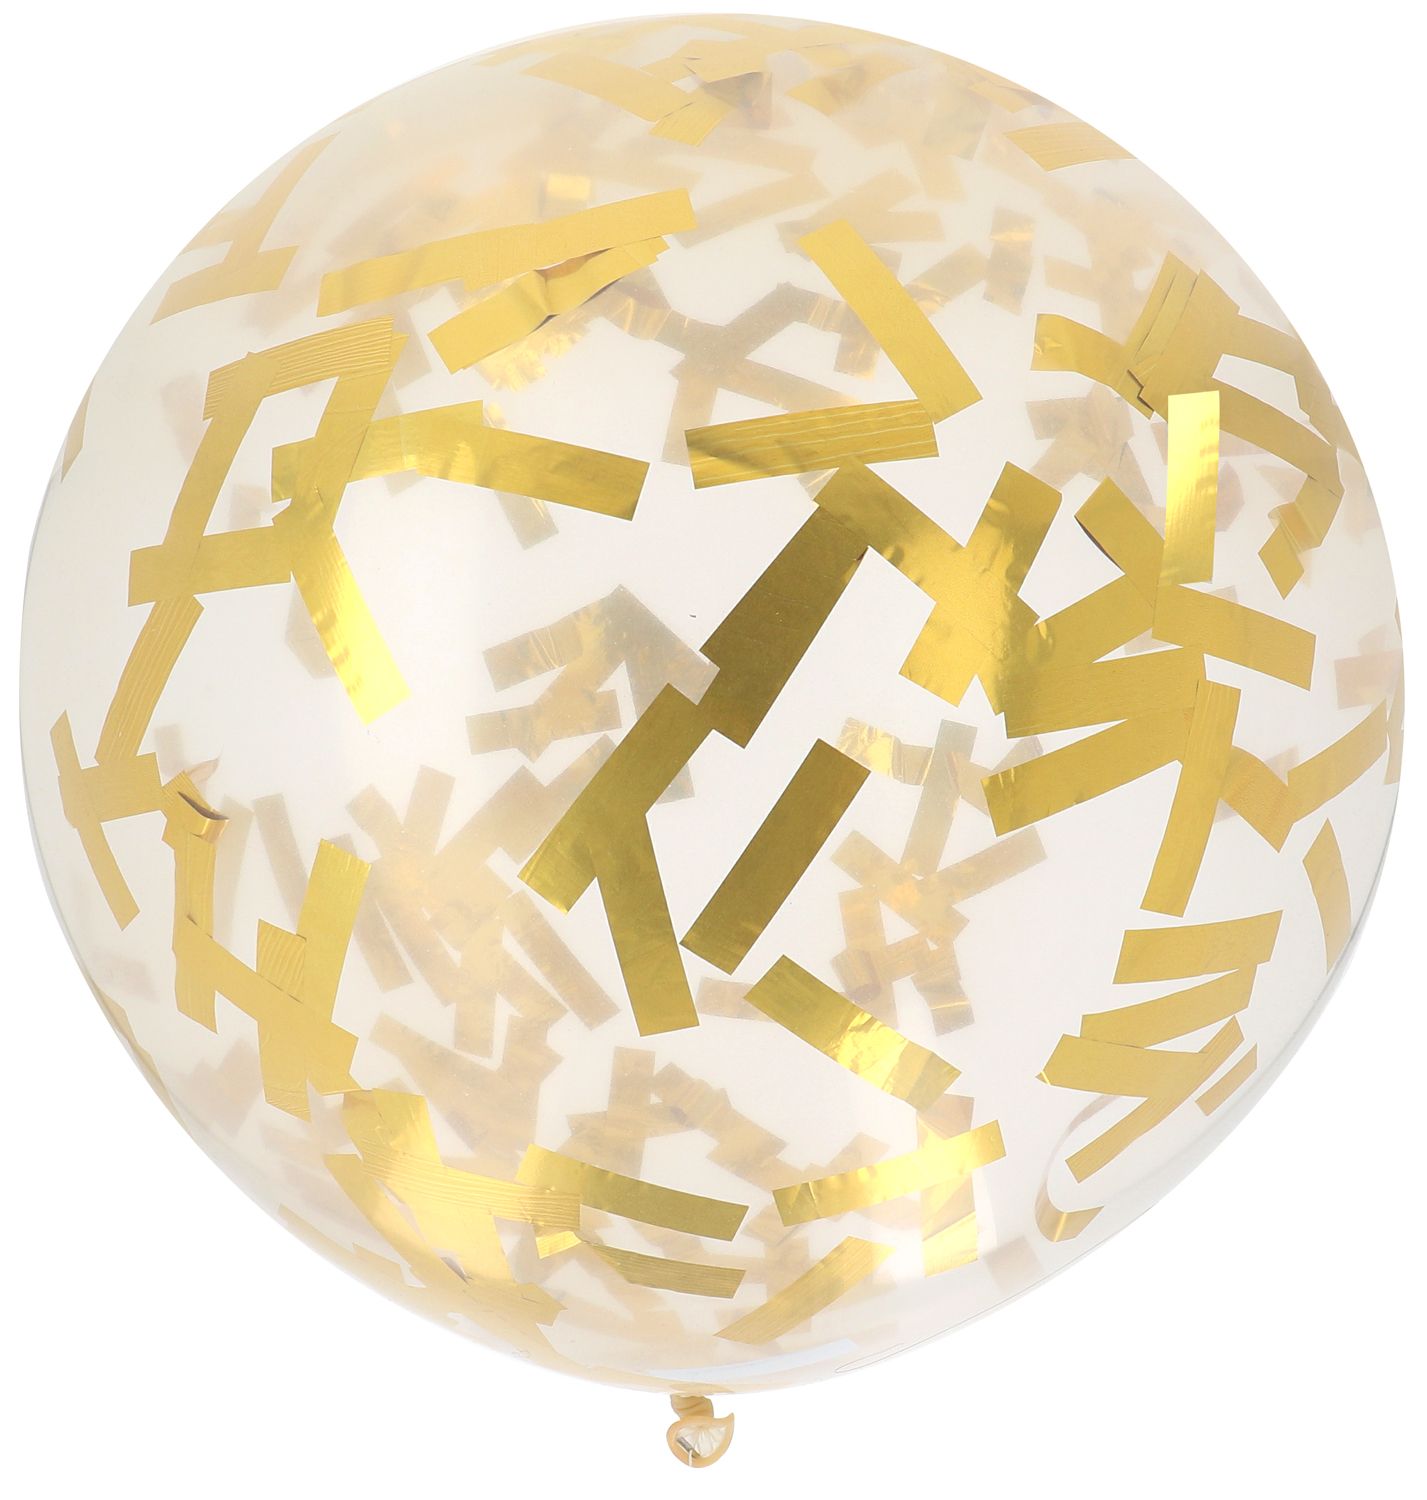 Ballon XL met confetti goud